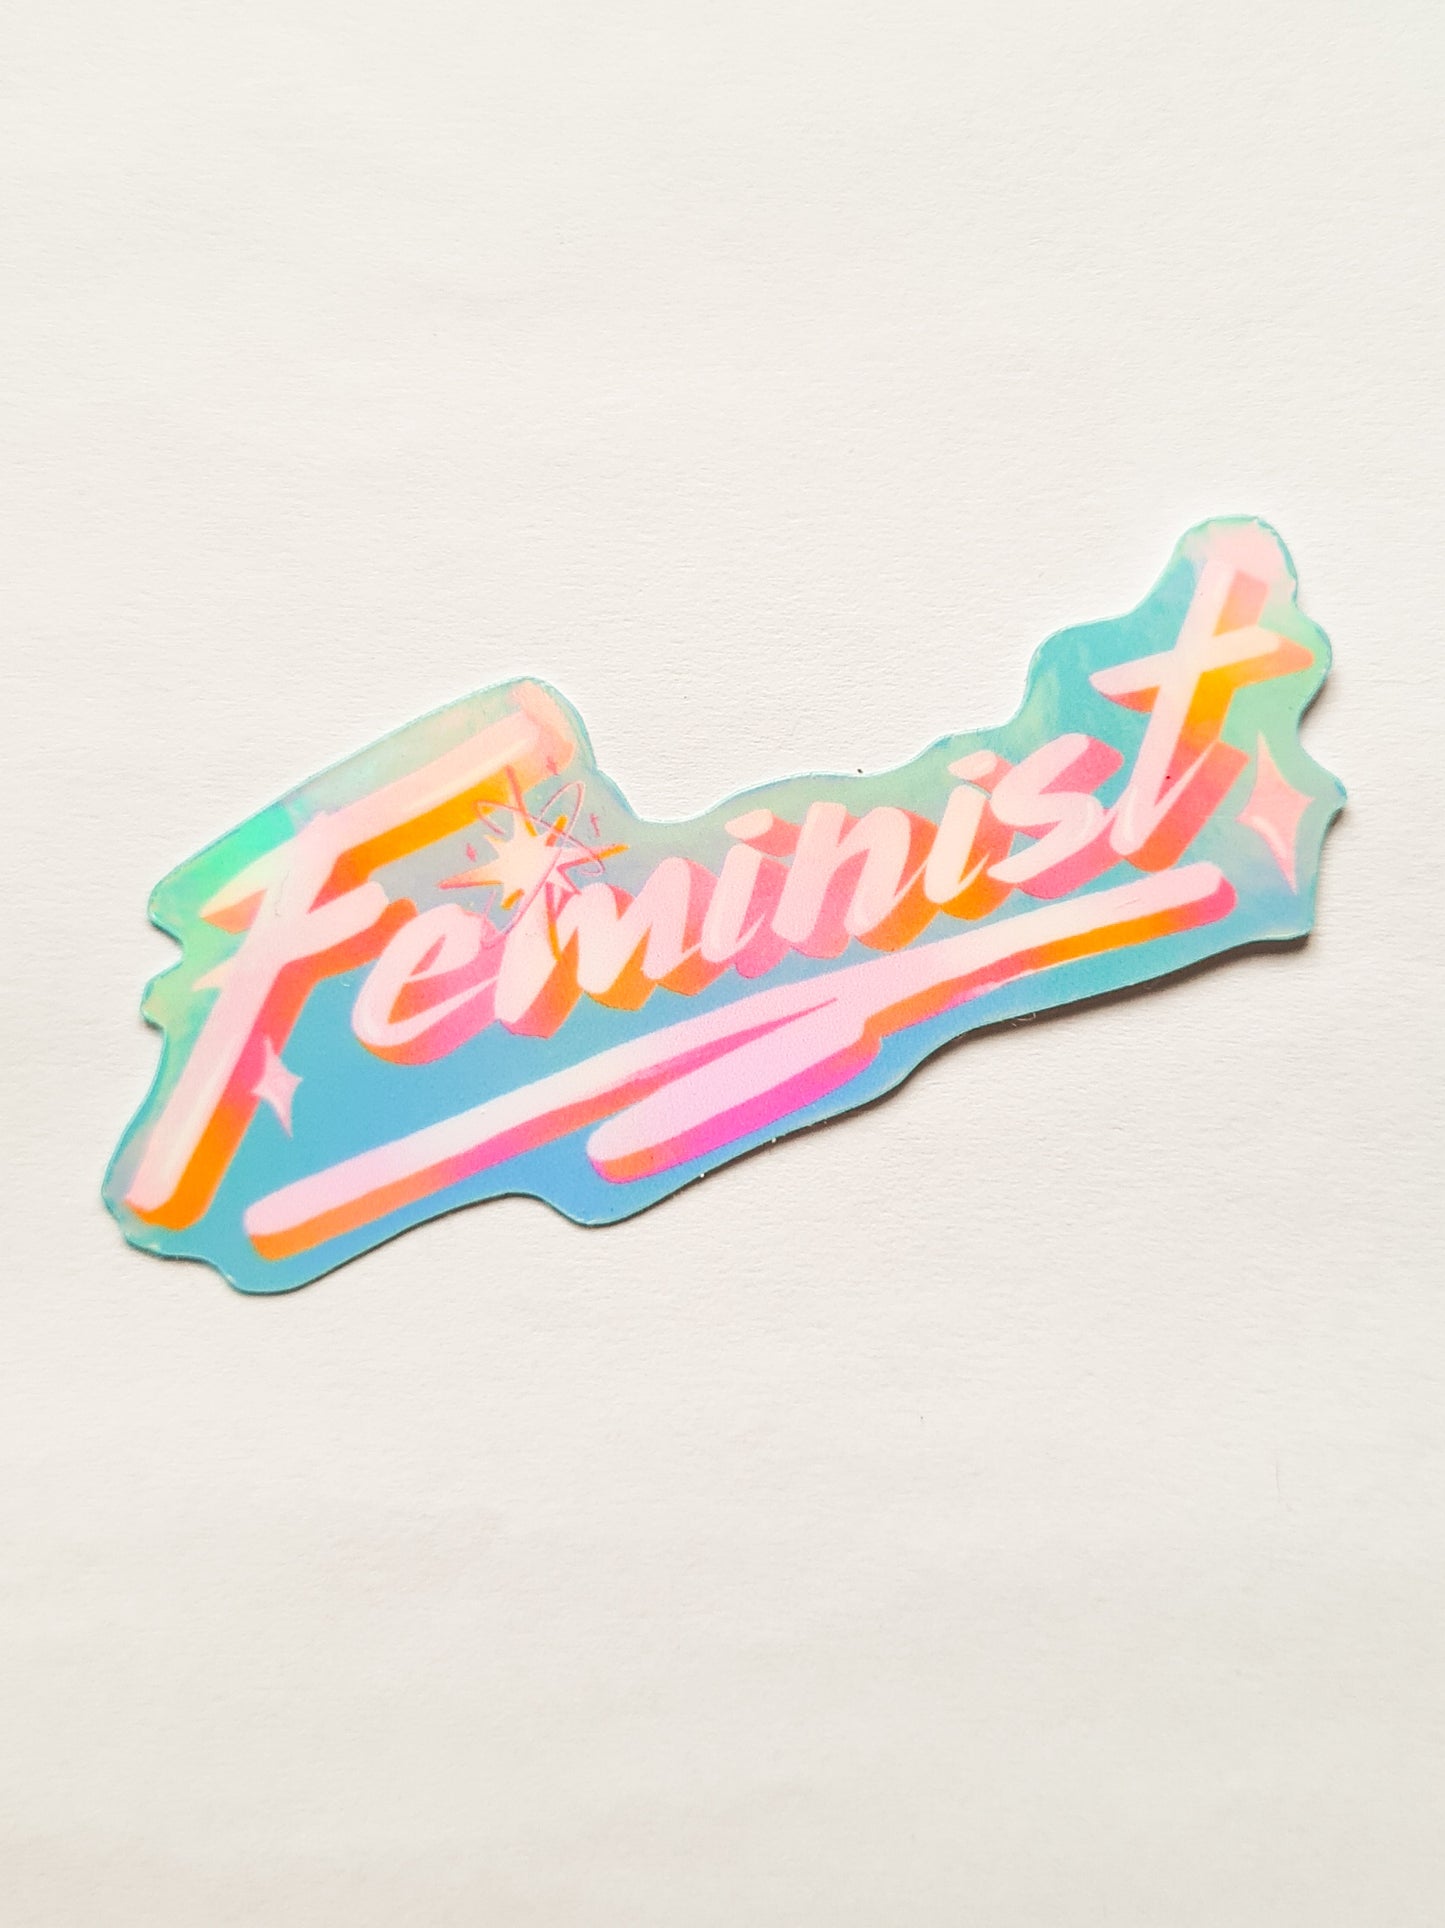 FEMINIST type sticker